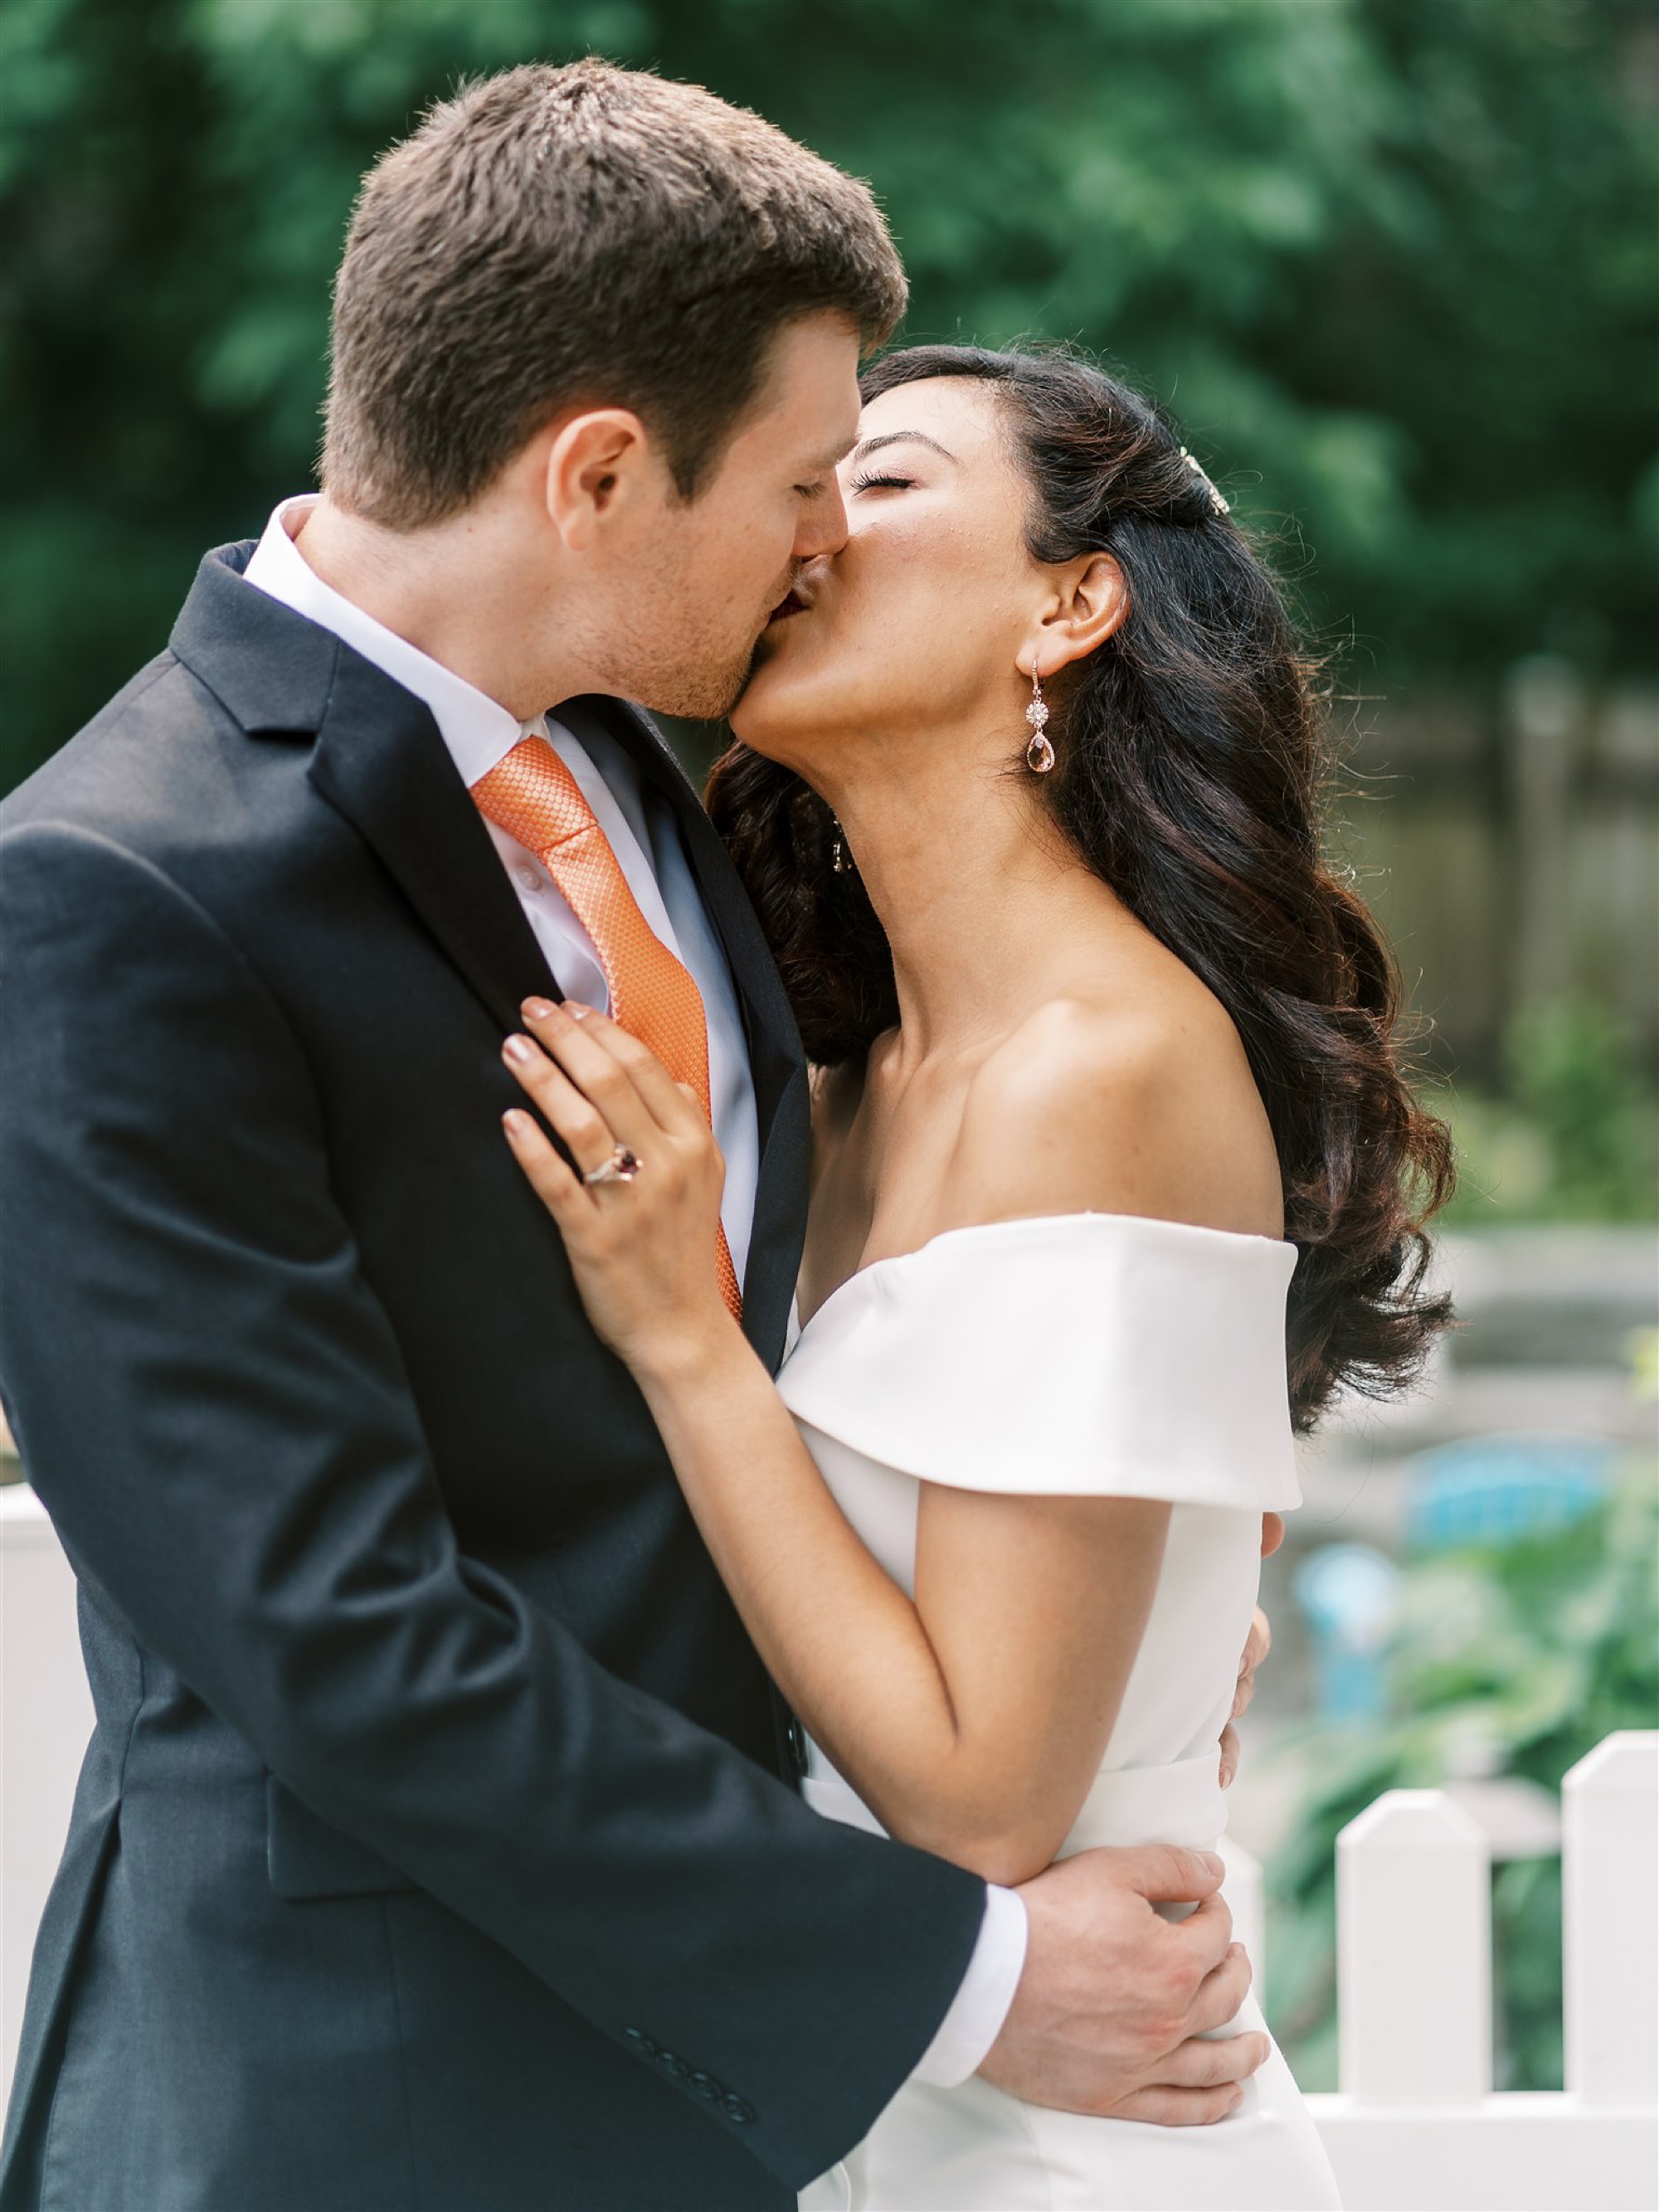 newlyweds kiss under white arbor in backyard 